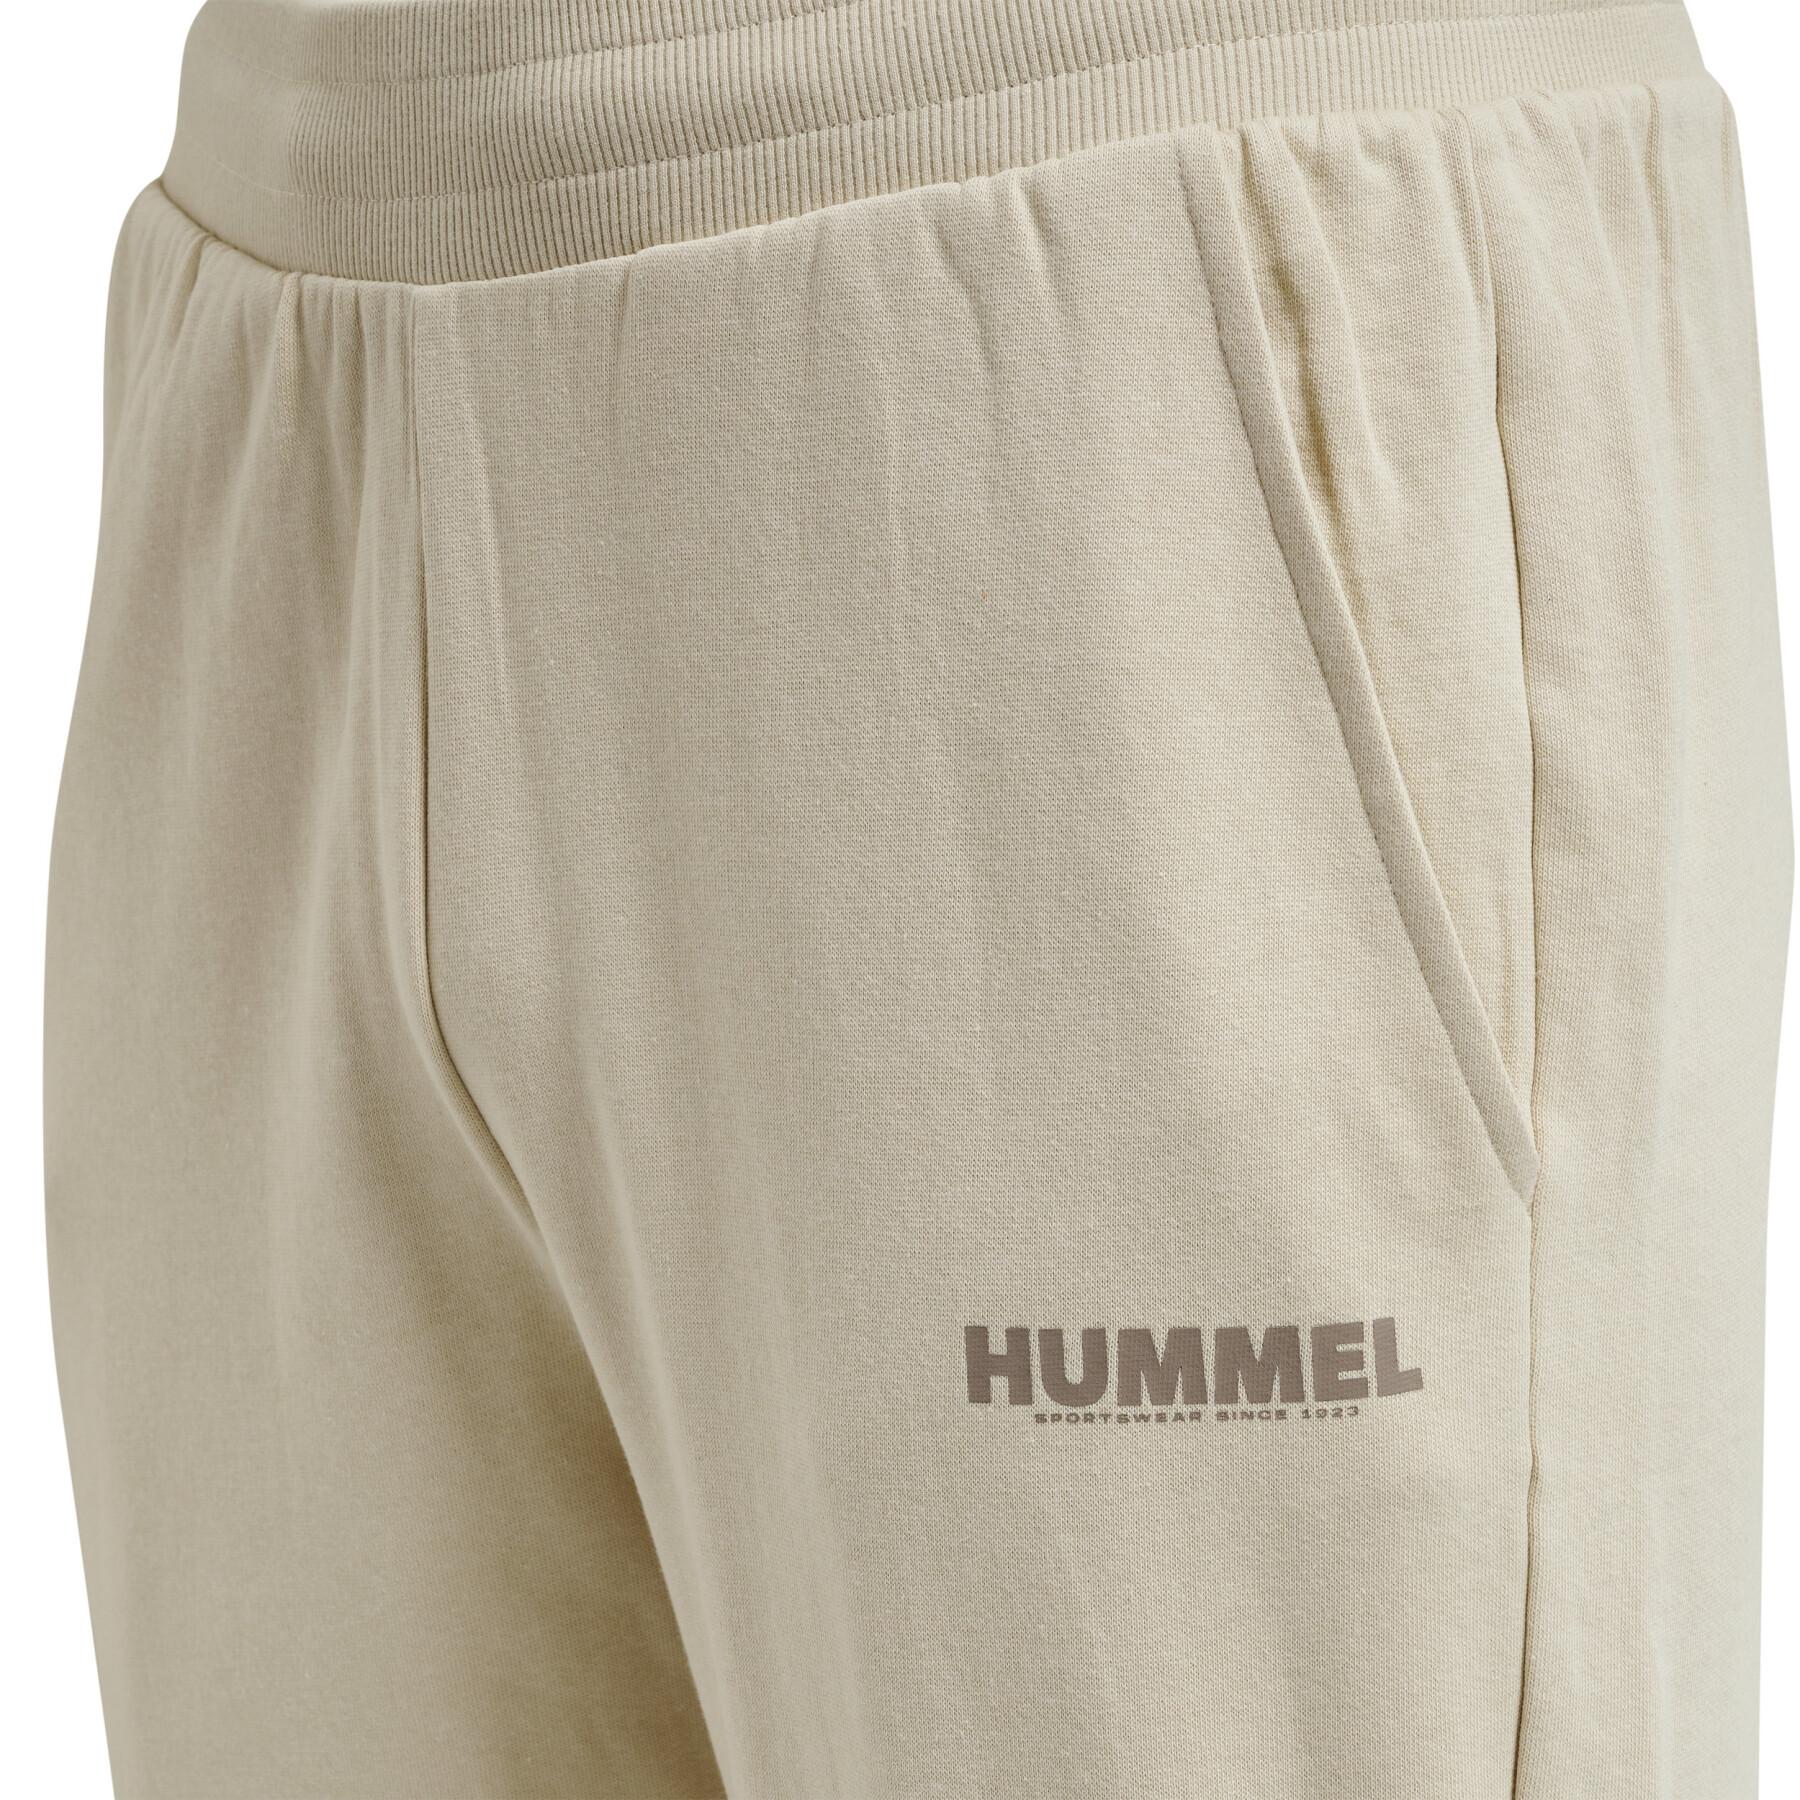 Fato de jogging cónico Hummel Legacy